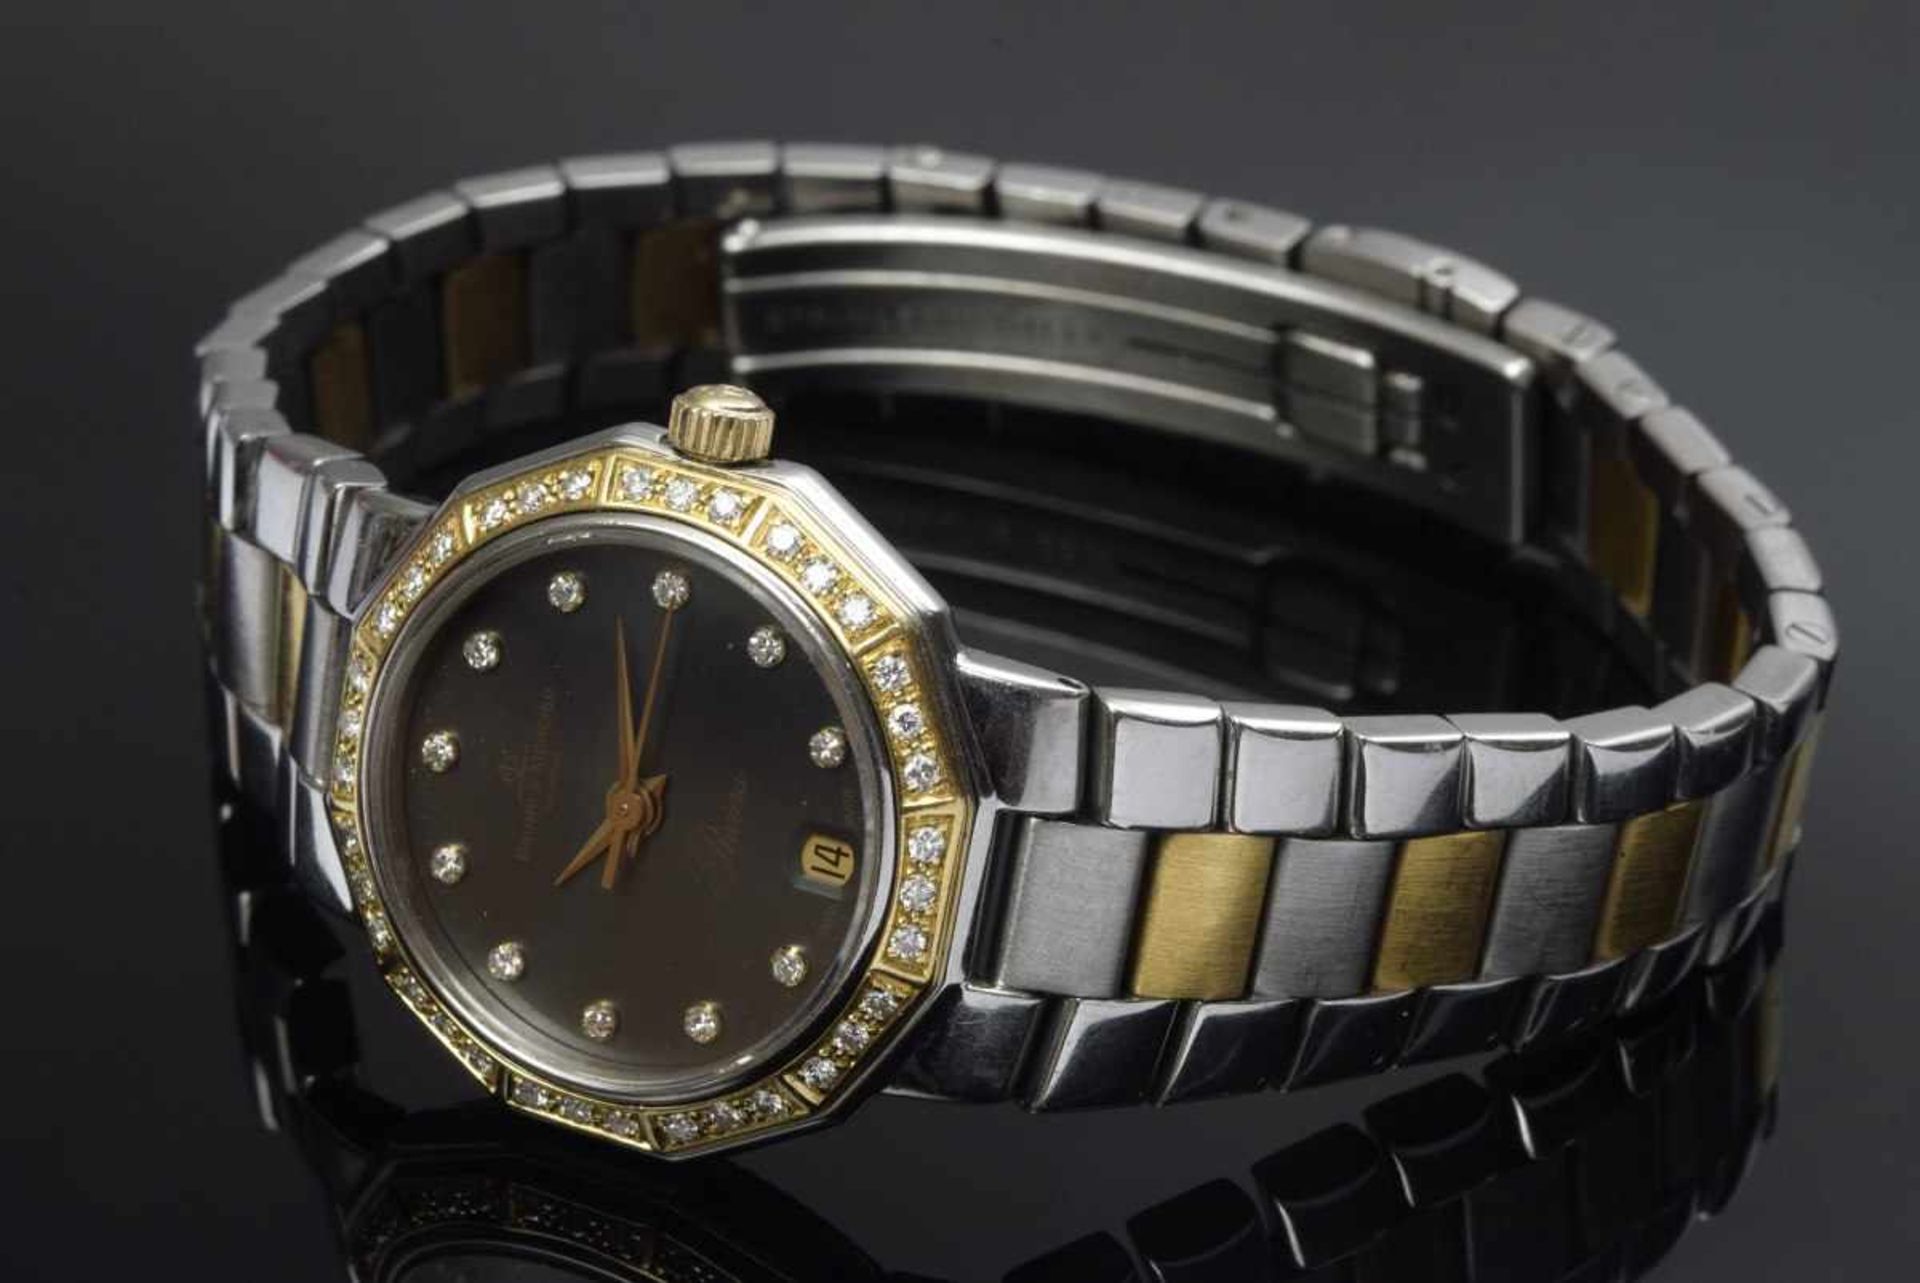 Baume & Mercier "Riviera" ladies' watch with diamonds and octagonal diamonds (add. approx. 0.40ct/